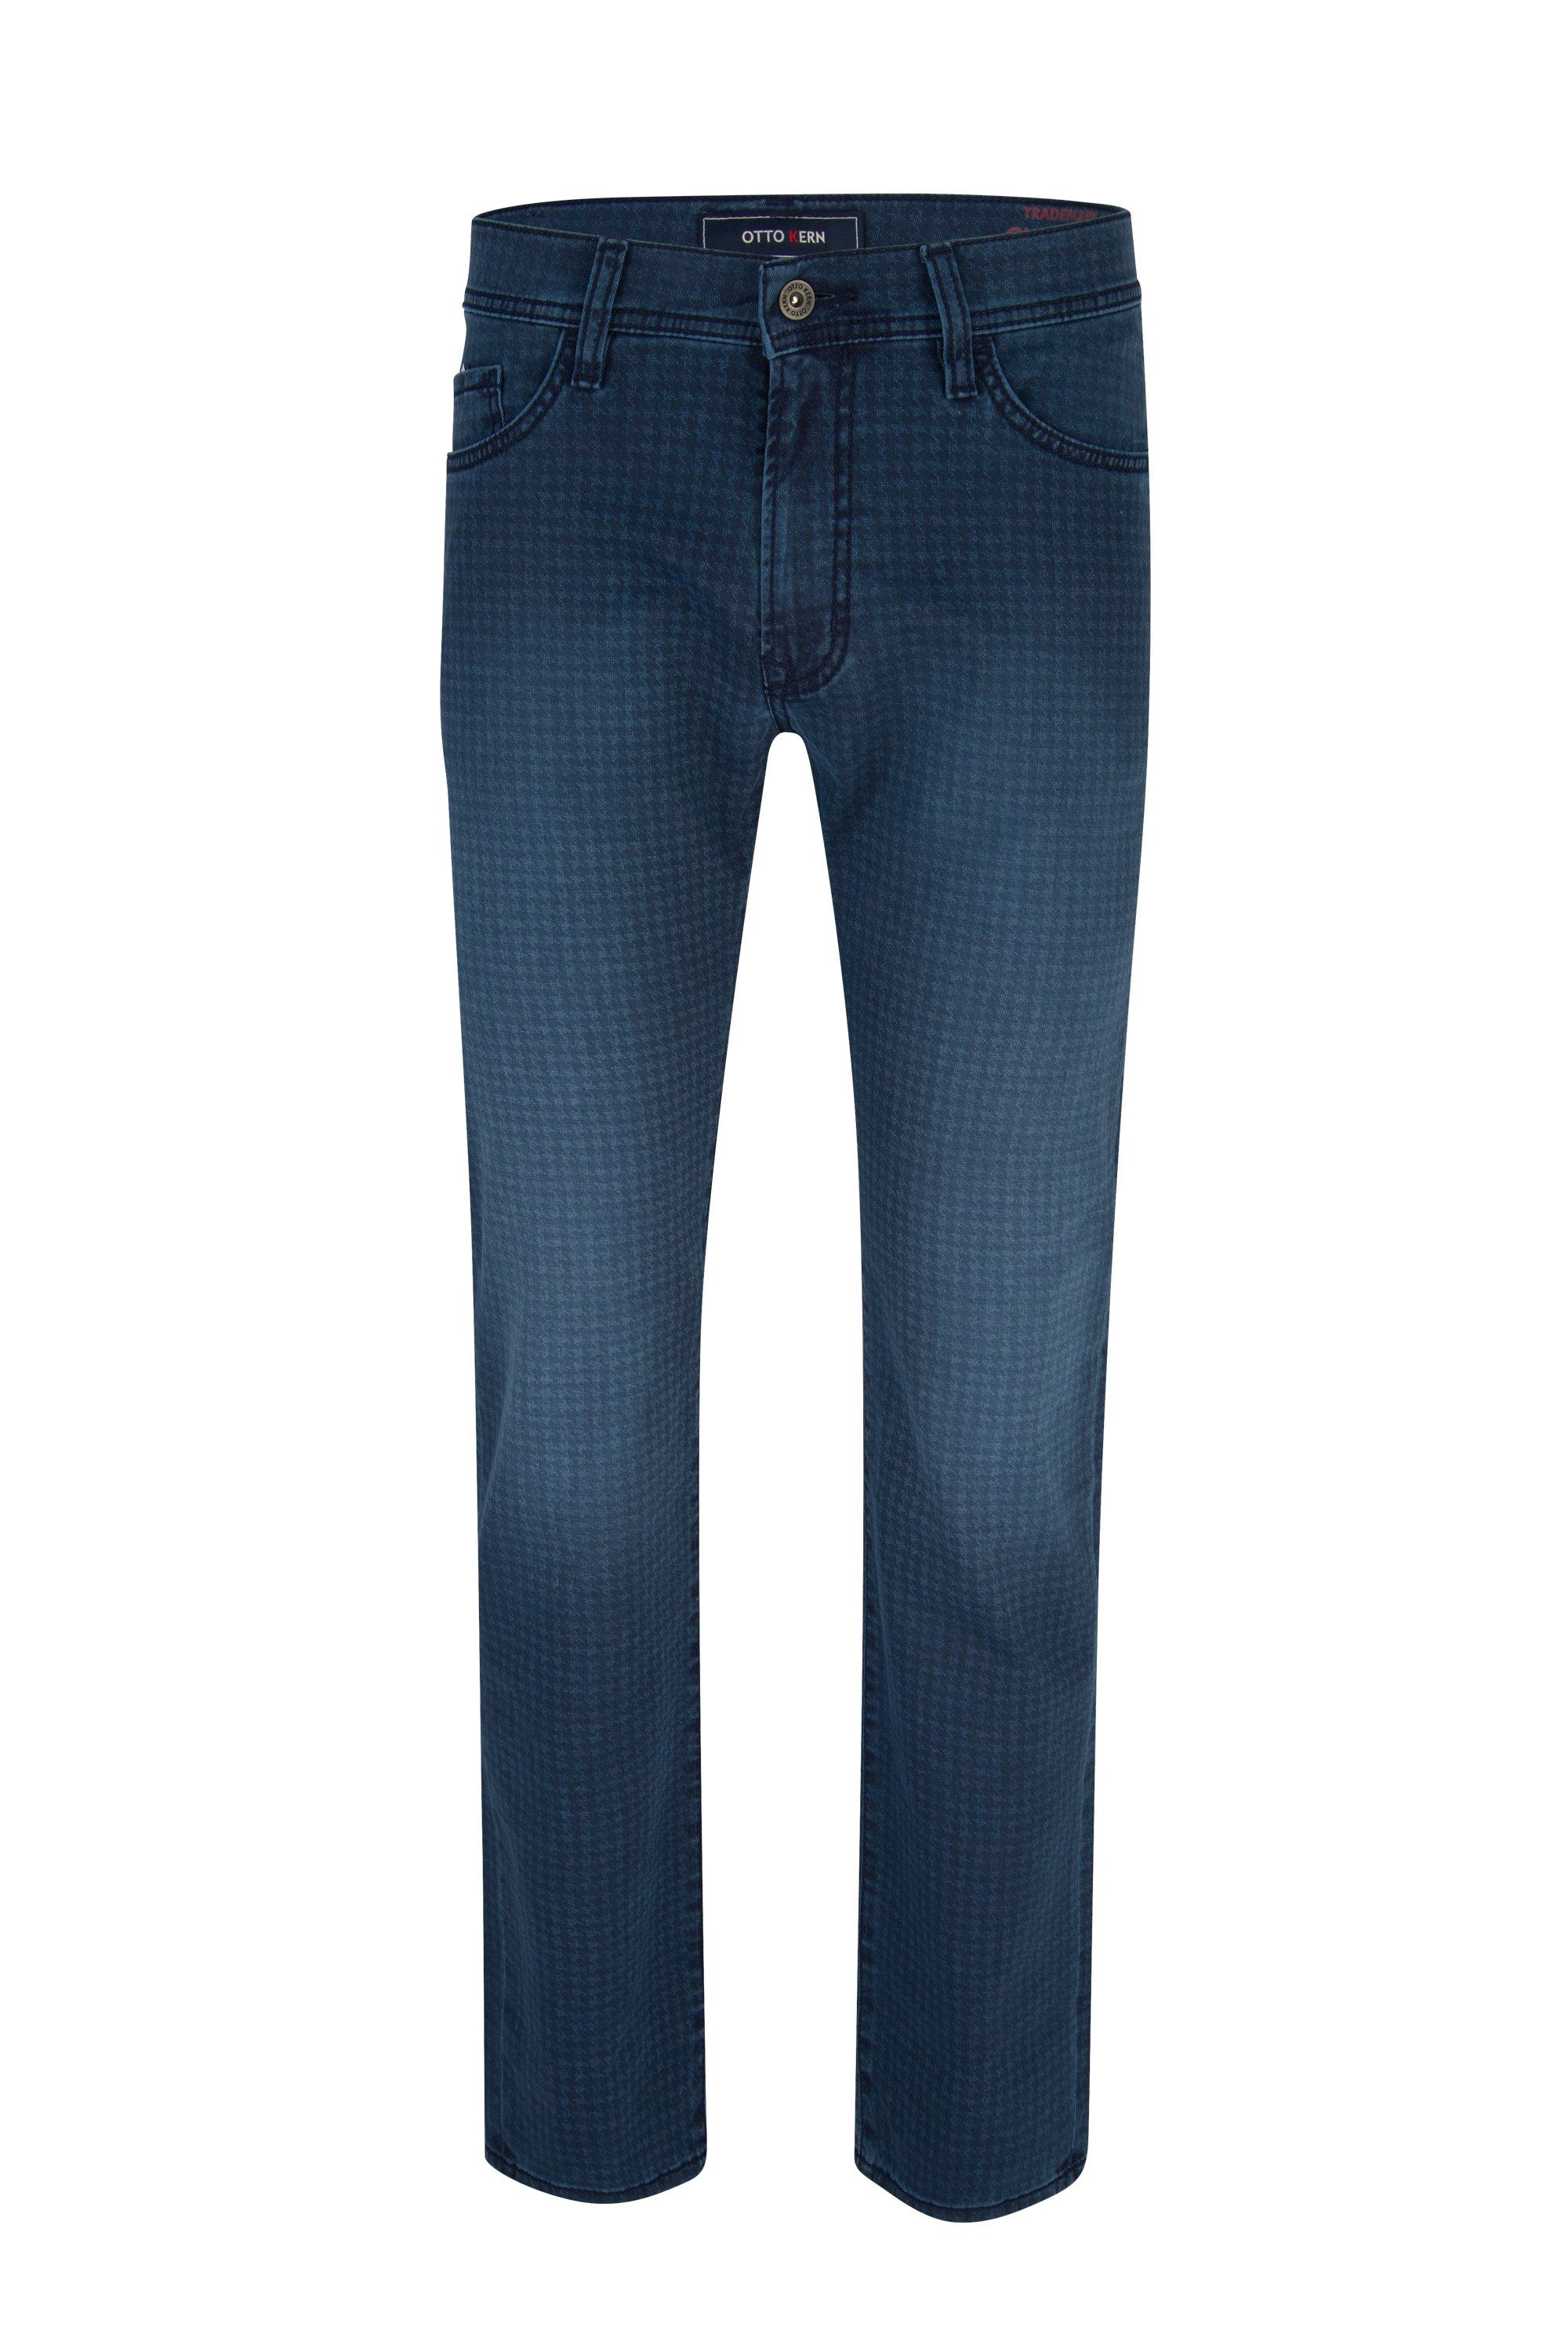 Kern 5-Pocket-Jeans blue 6700.6822 67042 KERN OTTO JOHN patterned used